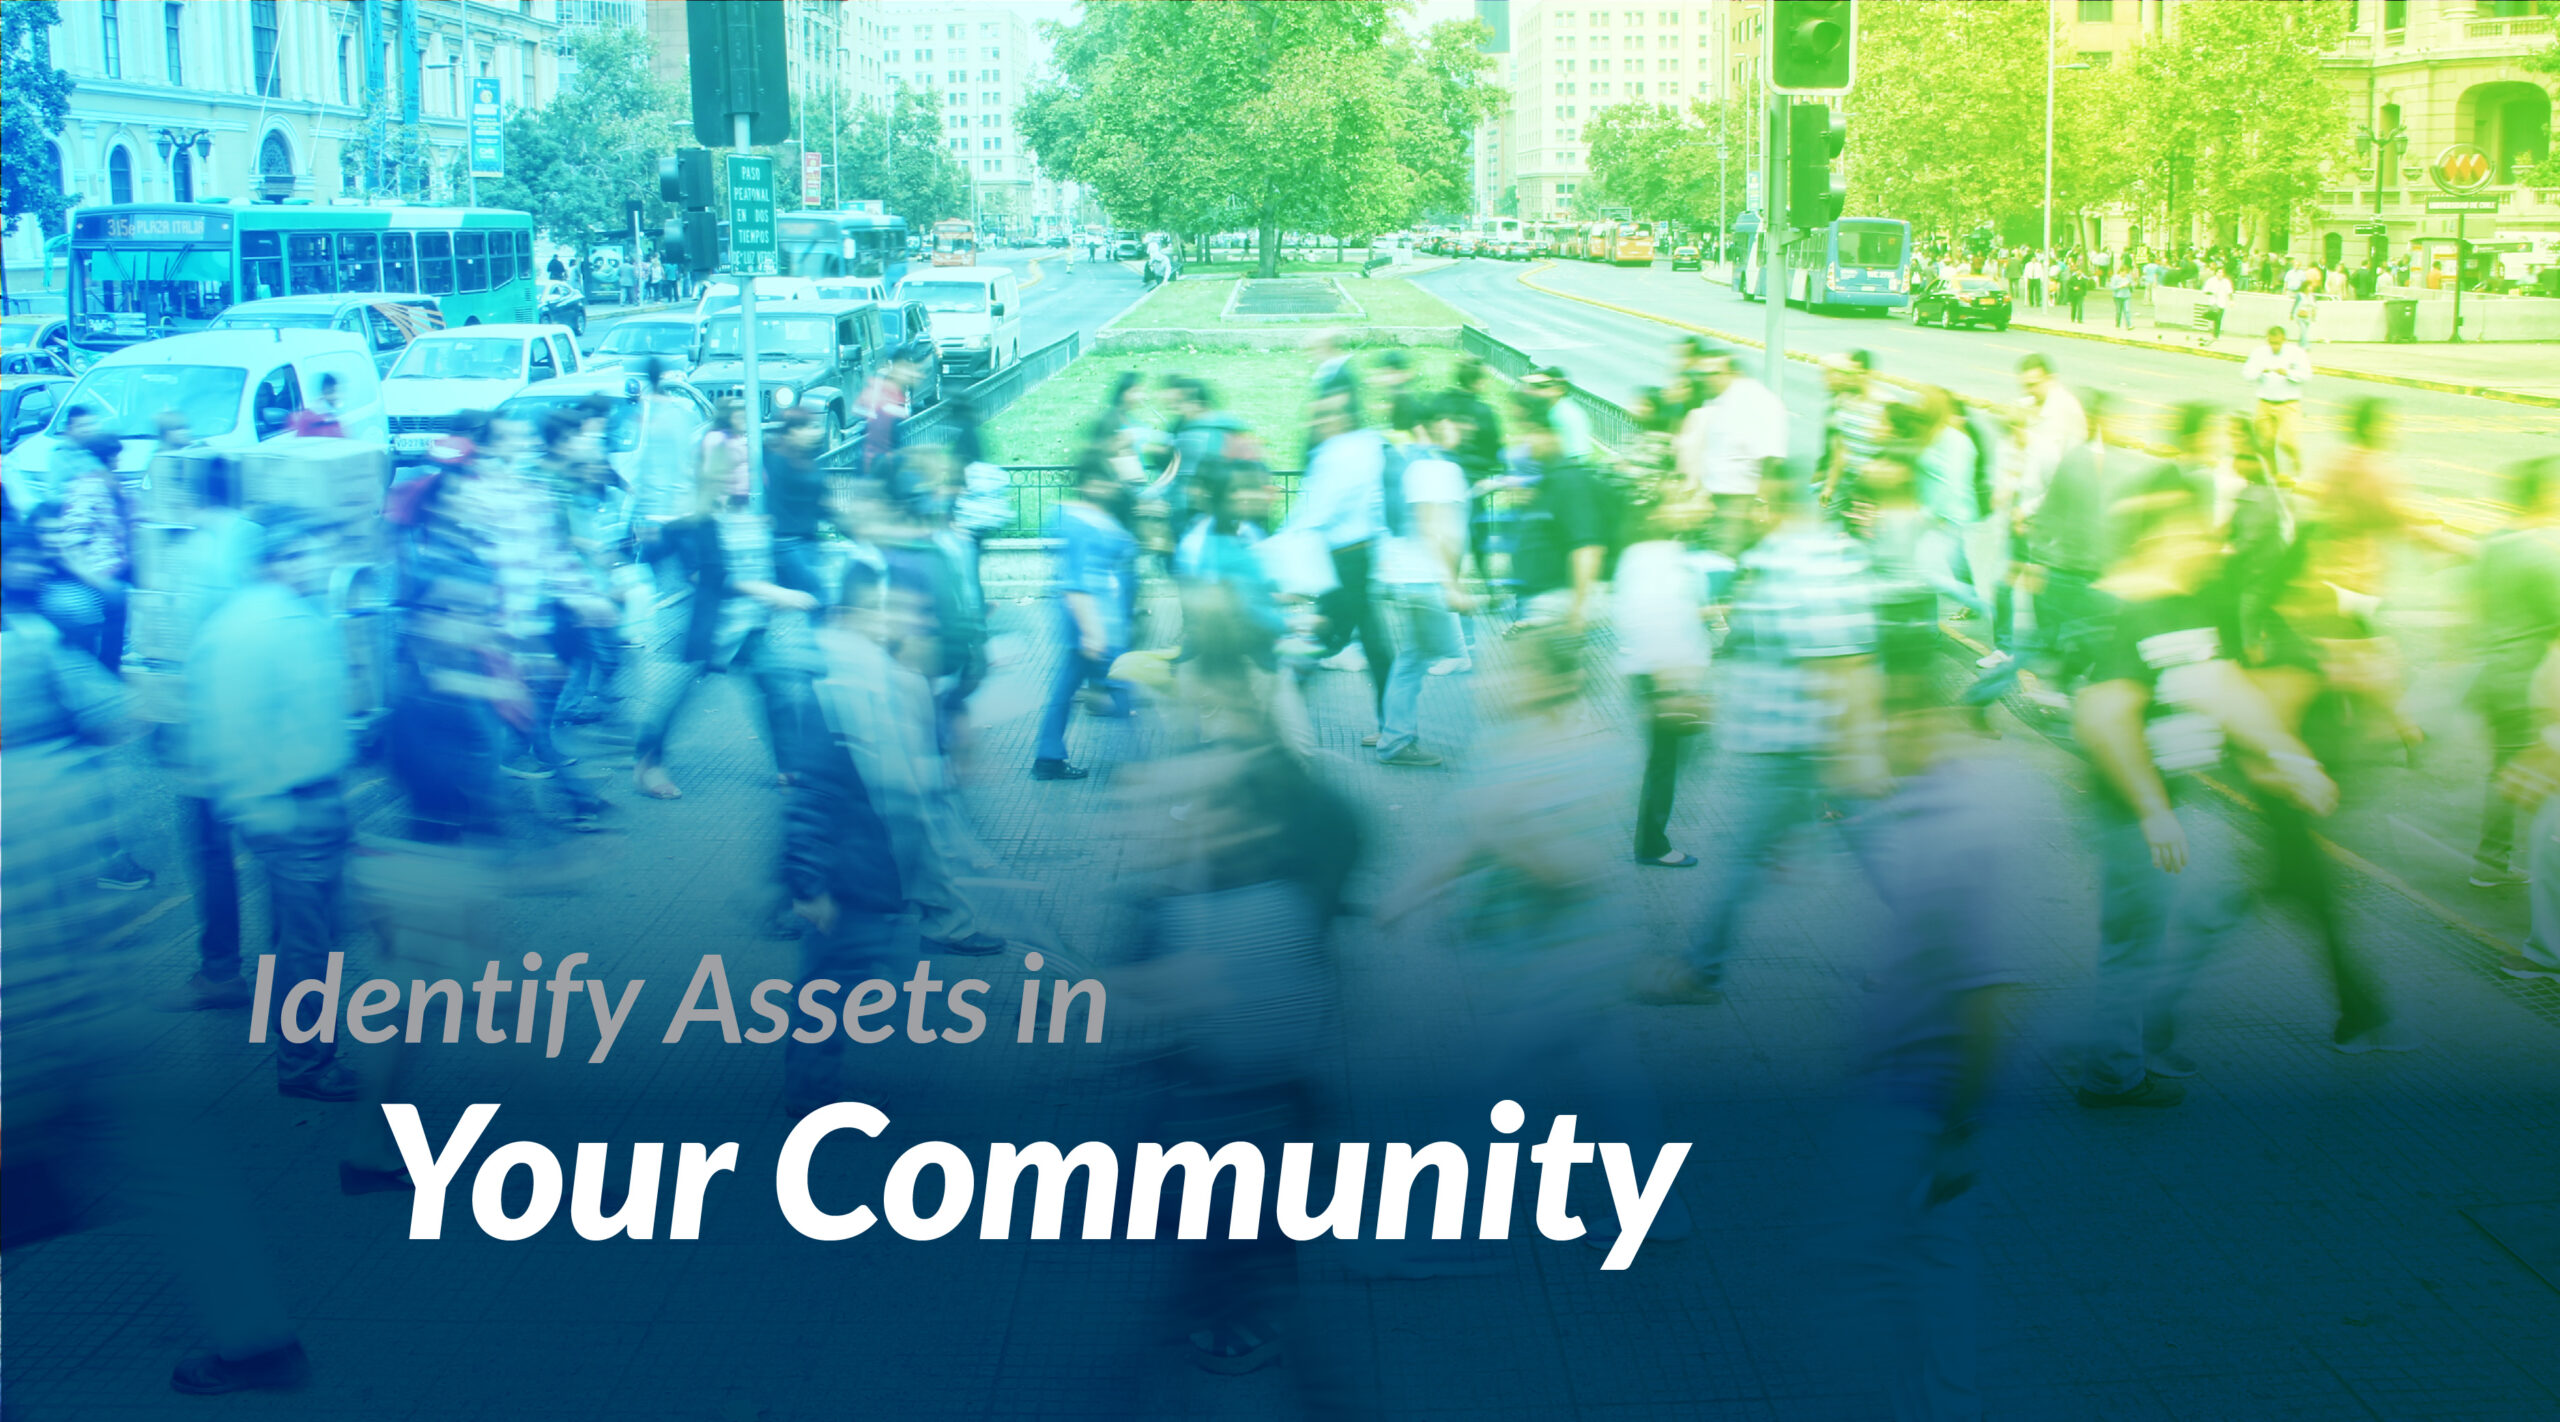 Identifying Community Assets